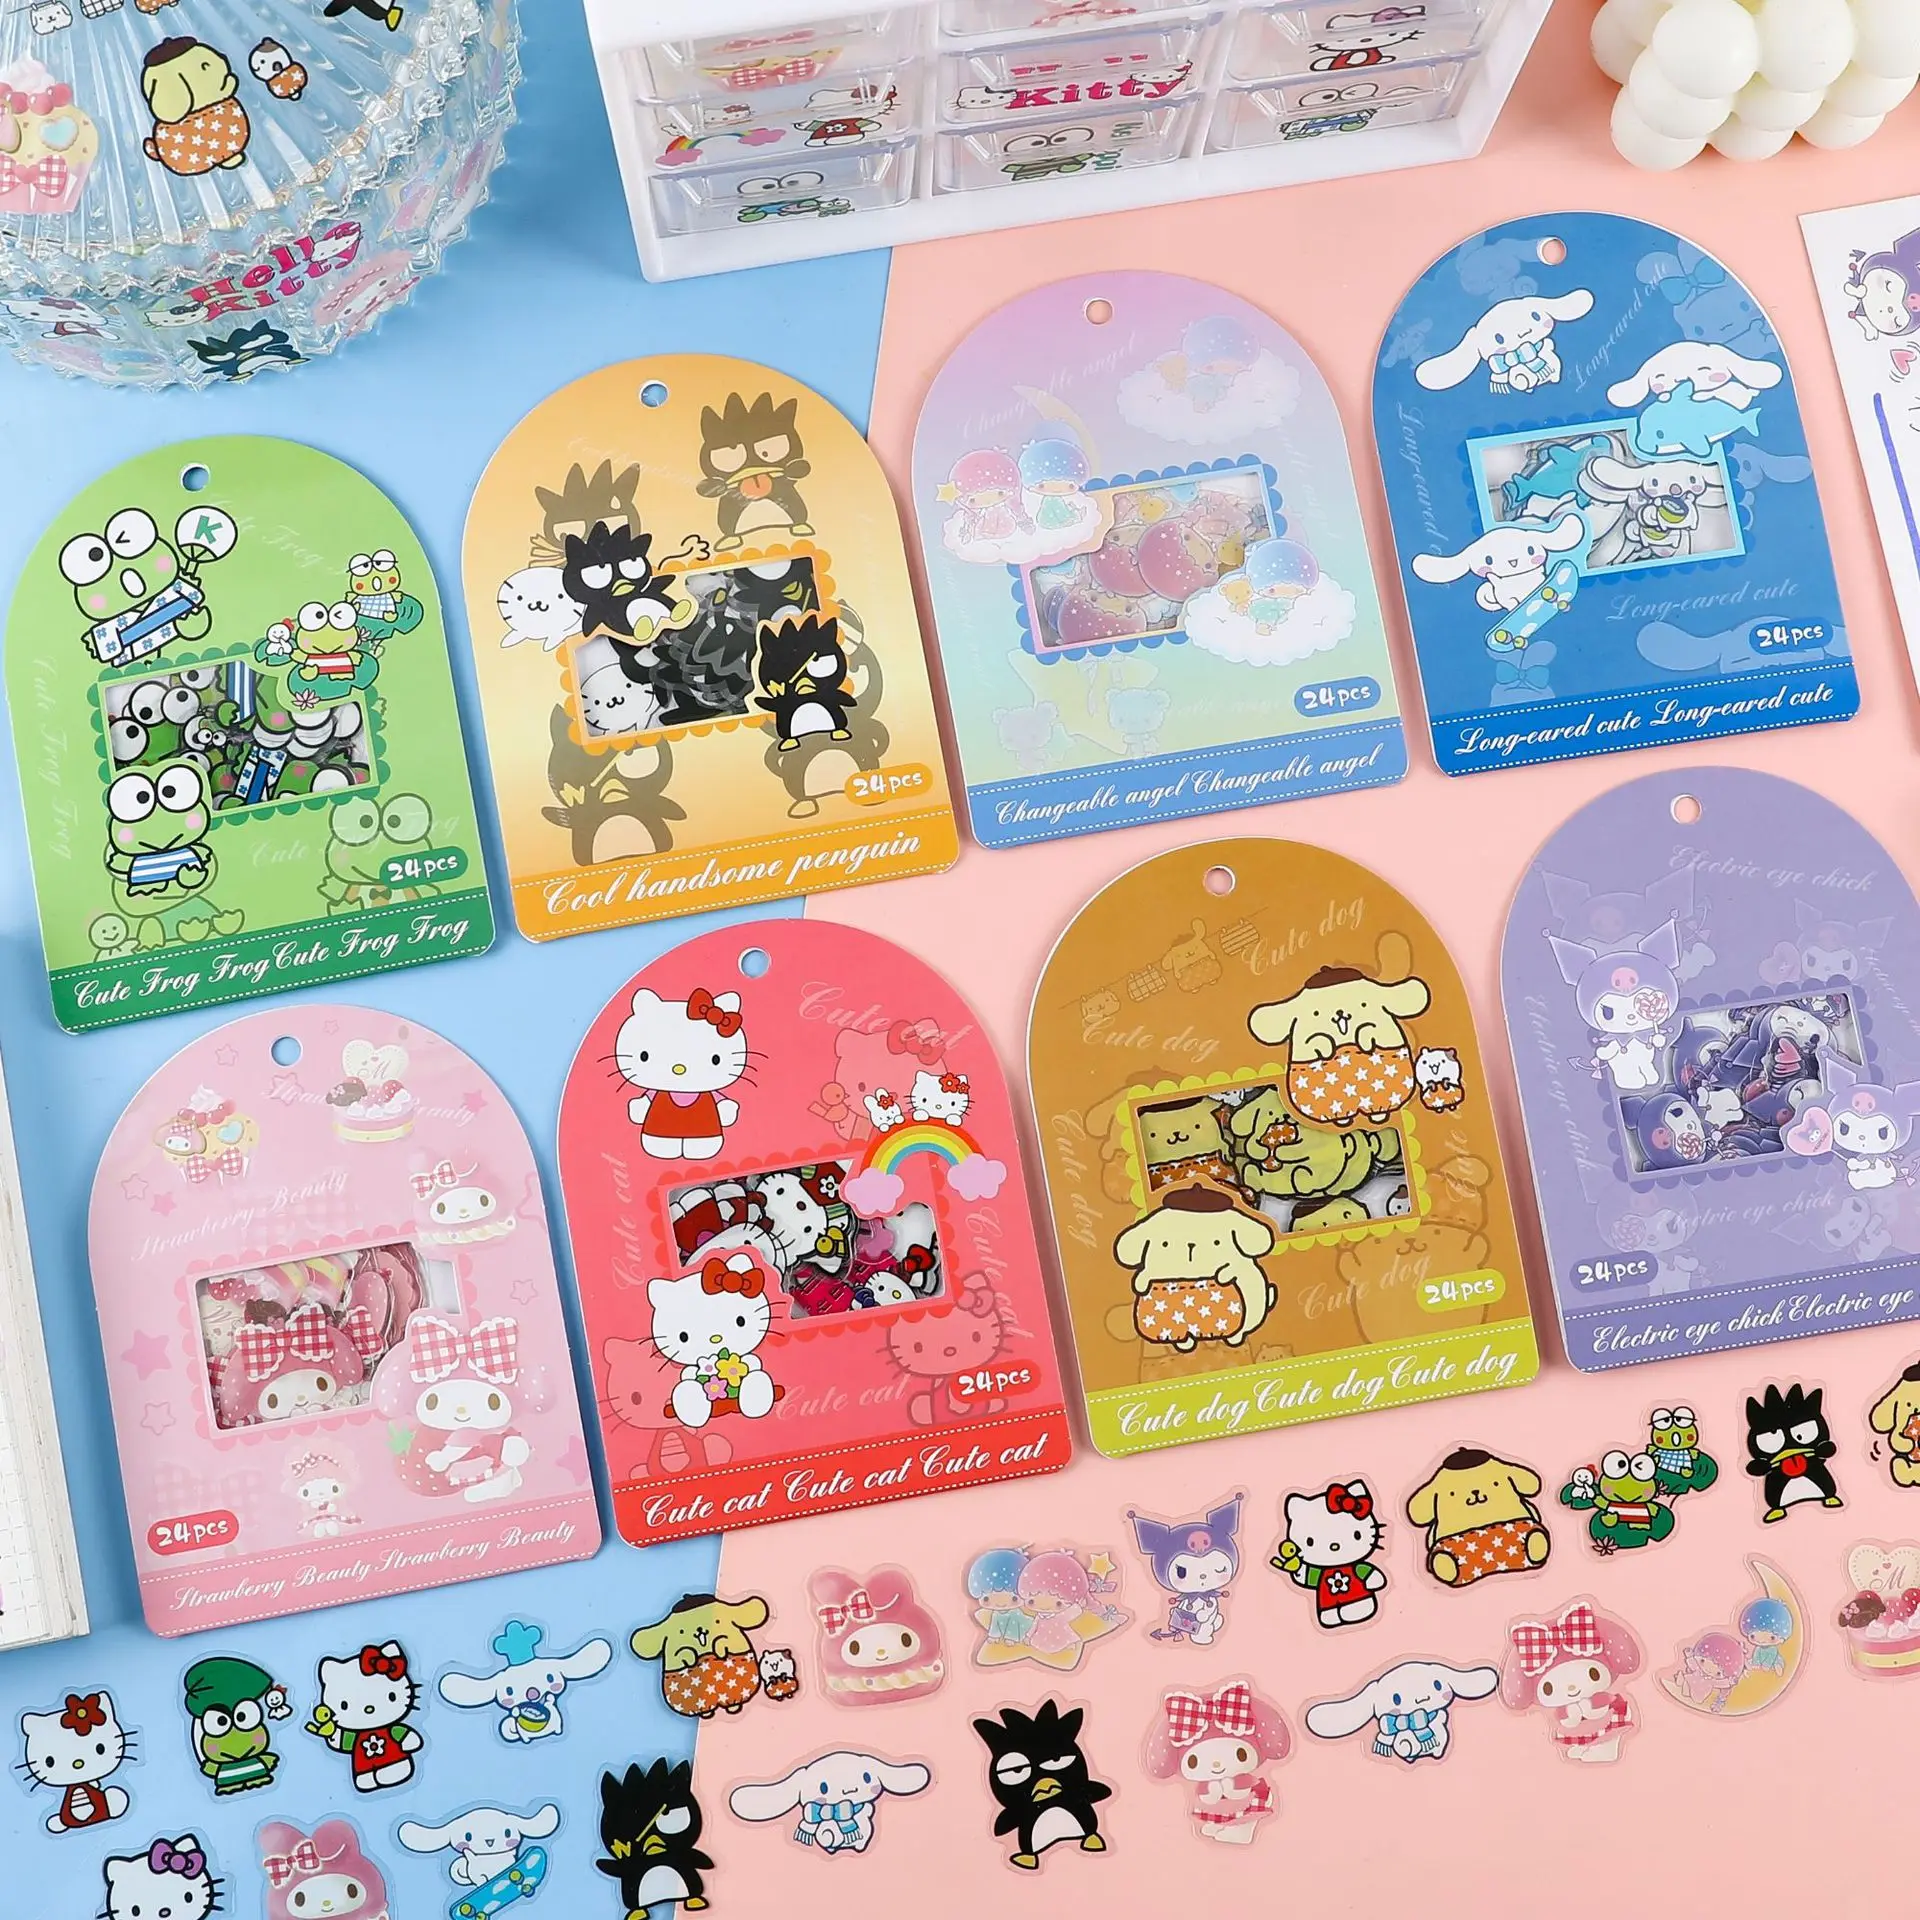 24Pcs Cute Hello Kitty Stickers Diy Gift Album Phone Diary Scrapbook Stationery Decorative Stickers School Supplies